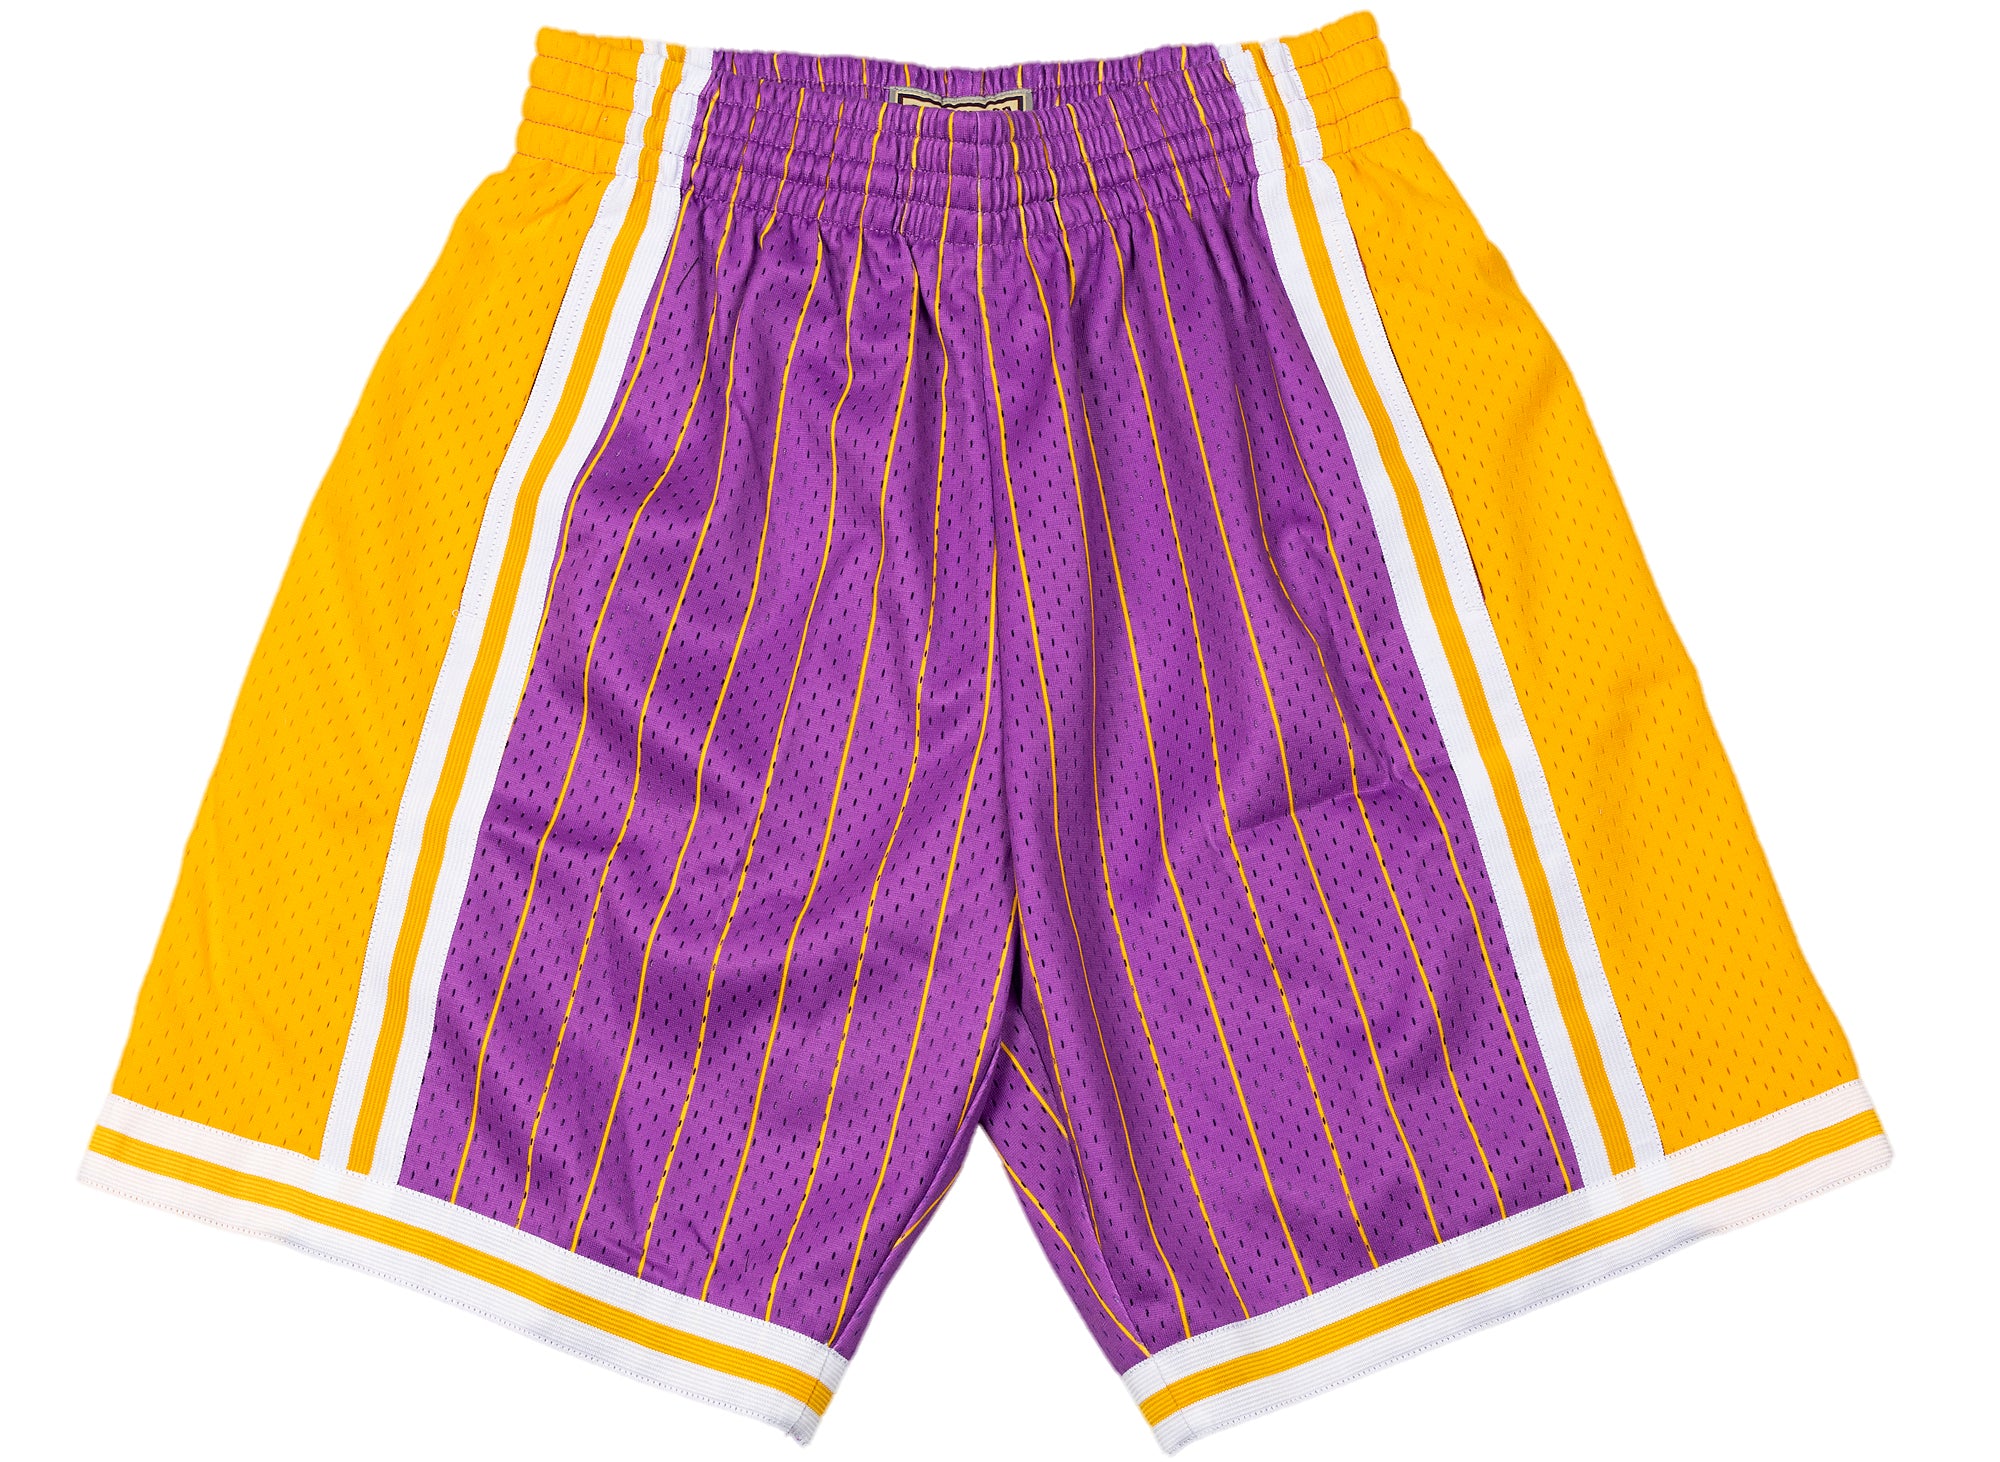 Lakers Shorts -  UK